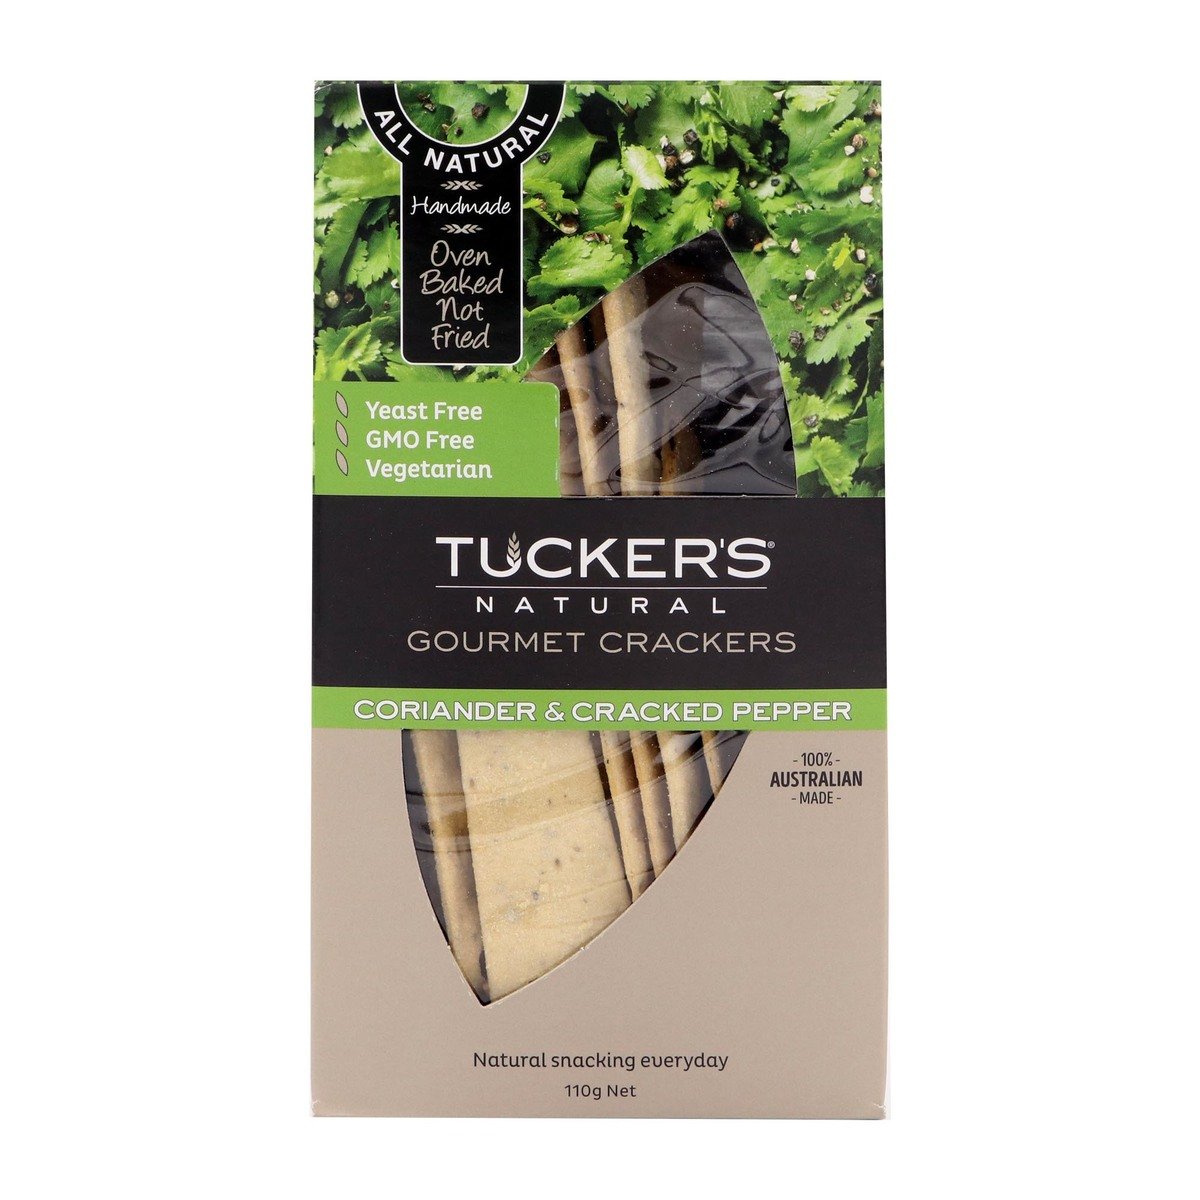 Tucker's Natural Gourmet Crackers Coriander & Cracked Pepper 110g